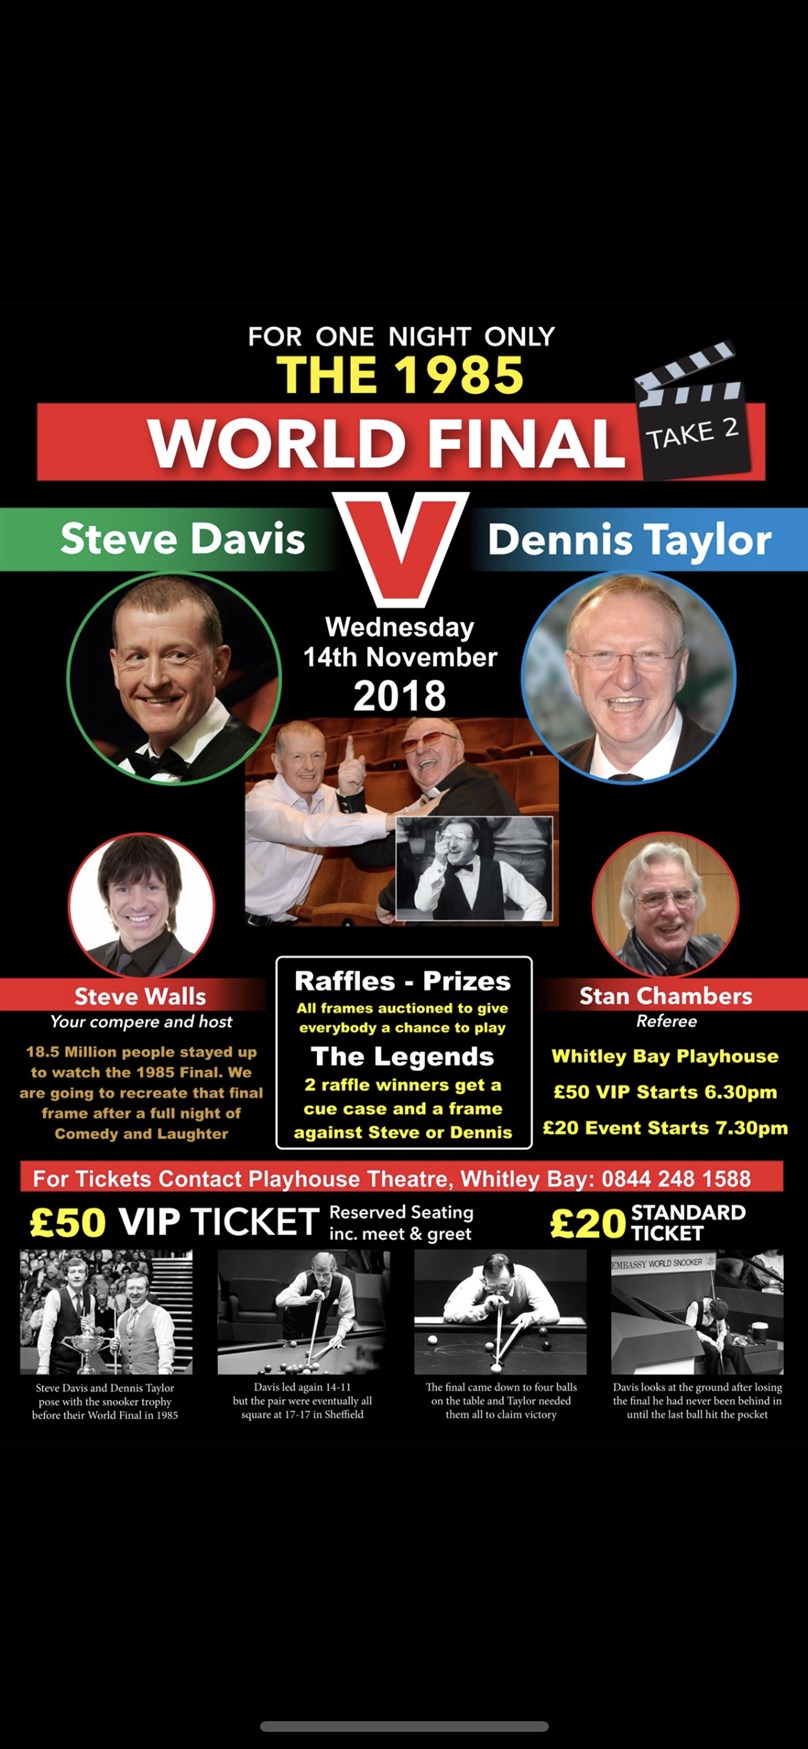 Steve Davis vs Dennis Taylor: The 1985 World Final Take 2